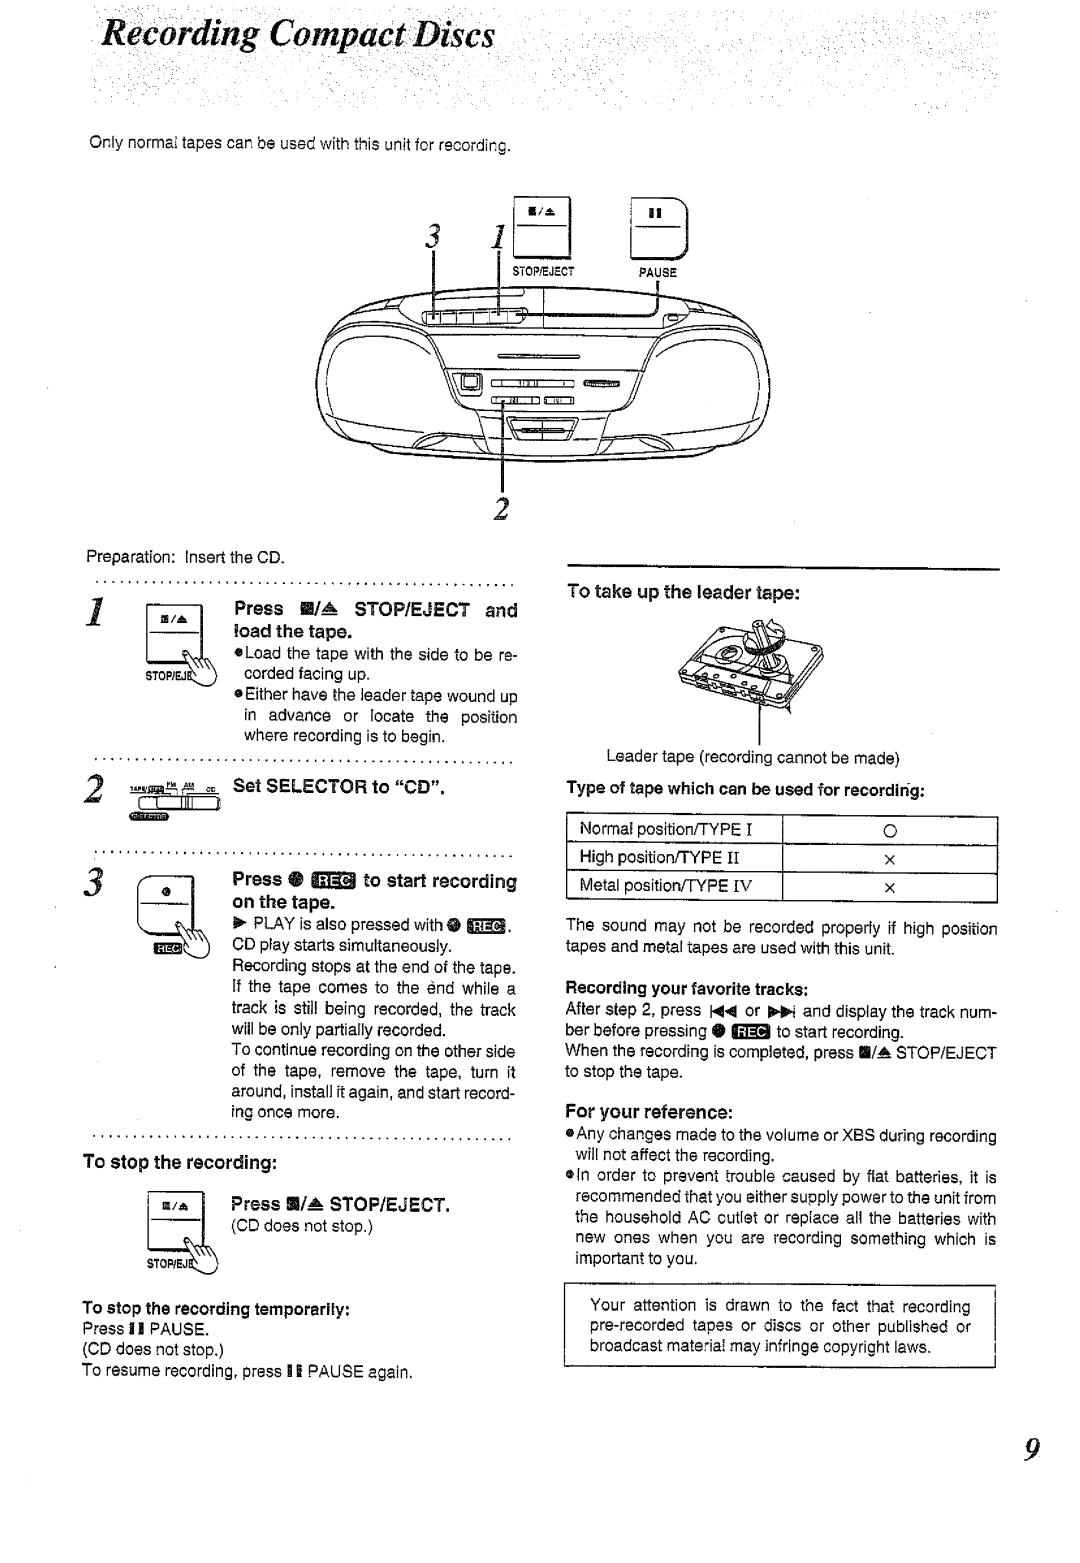 Panasonic RX-DS11 manual 